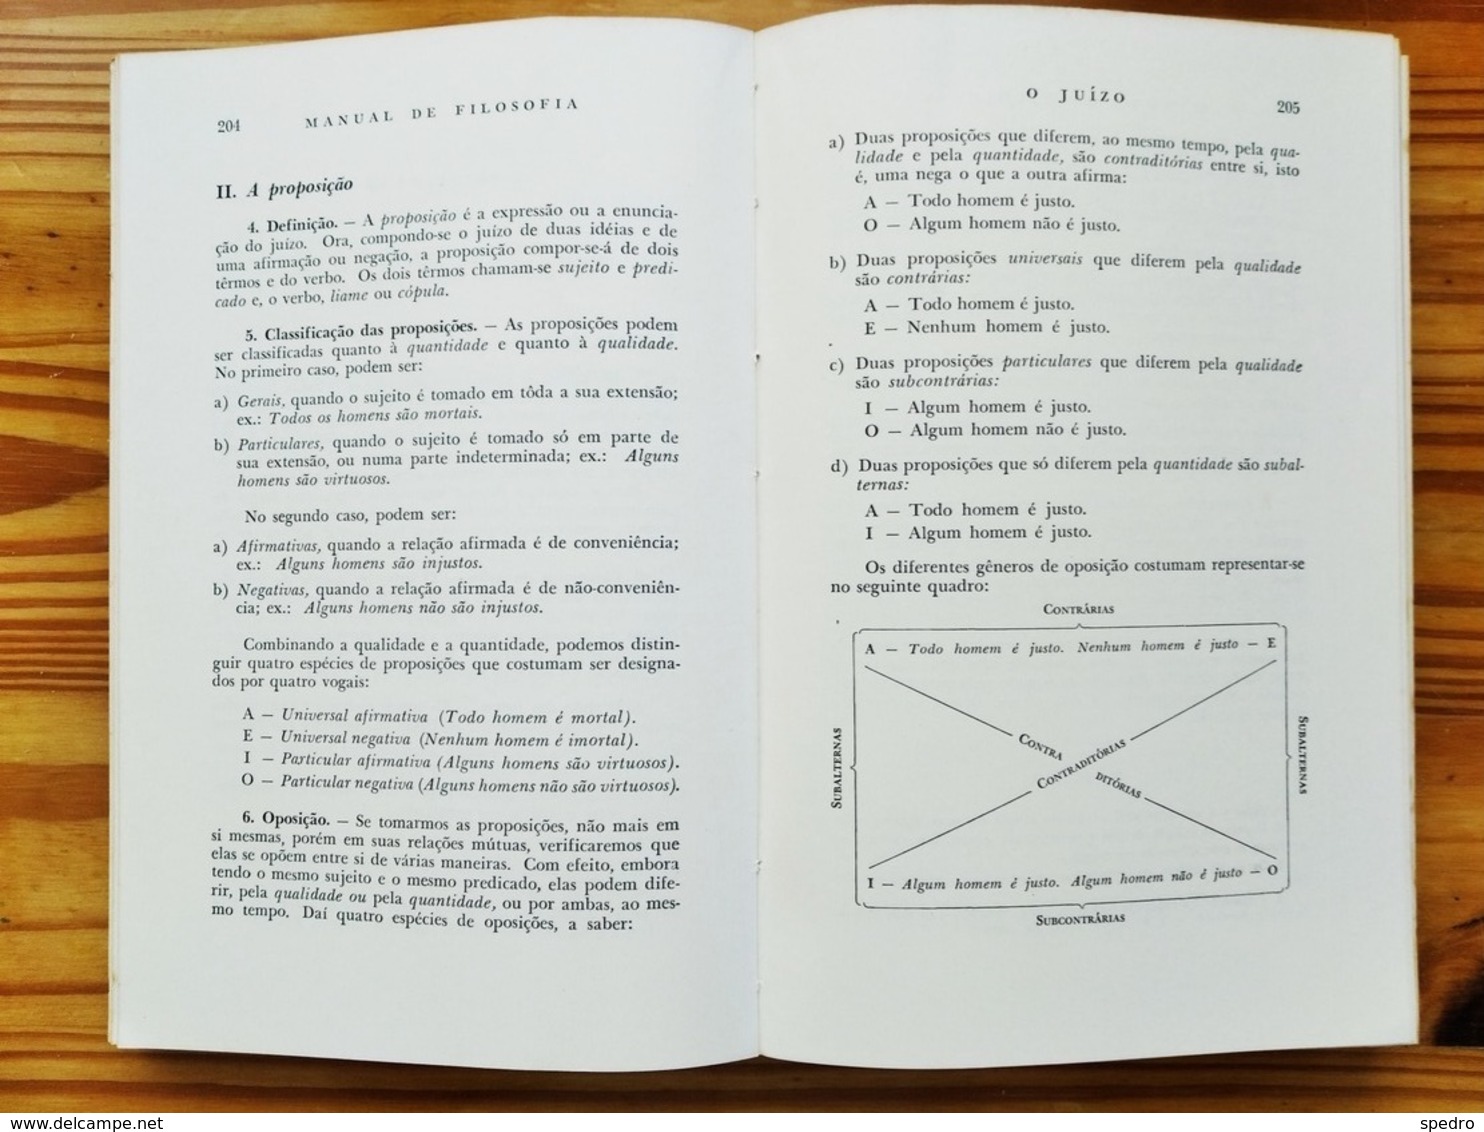 Brasil 1961 Manual De Filosofia Theobaldo Miranda Santos Companhia Editora Nacional Exemplar 6685 São Paulo Science - School